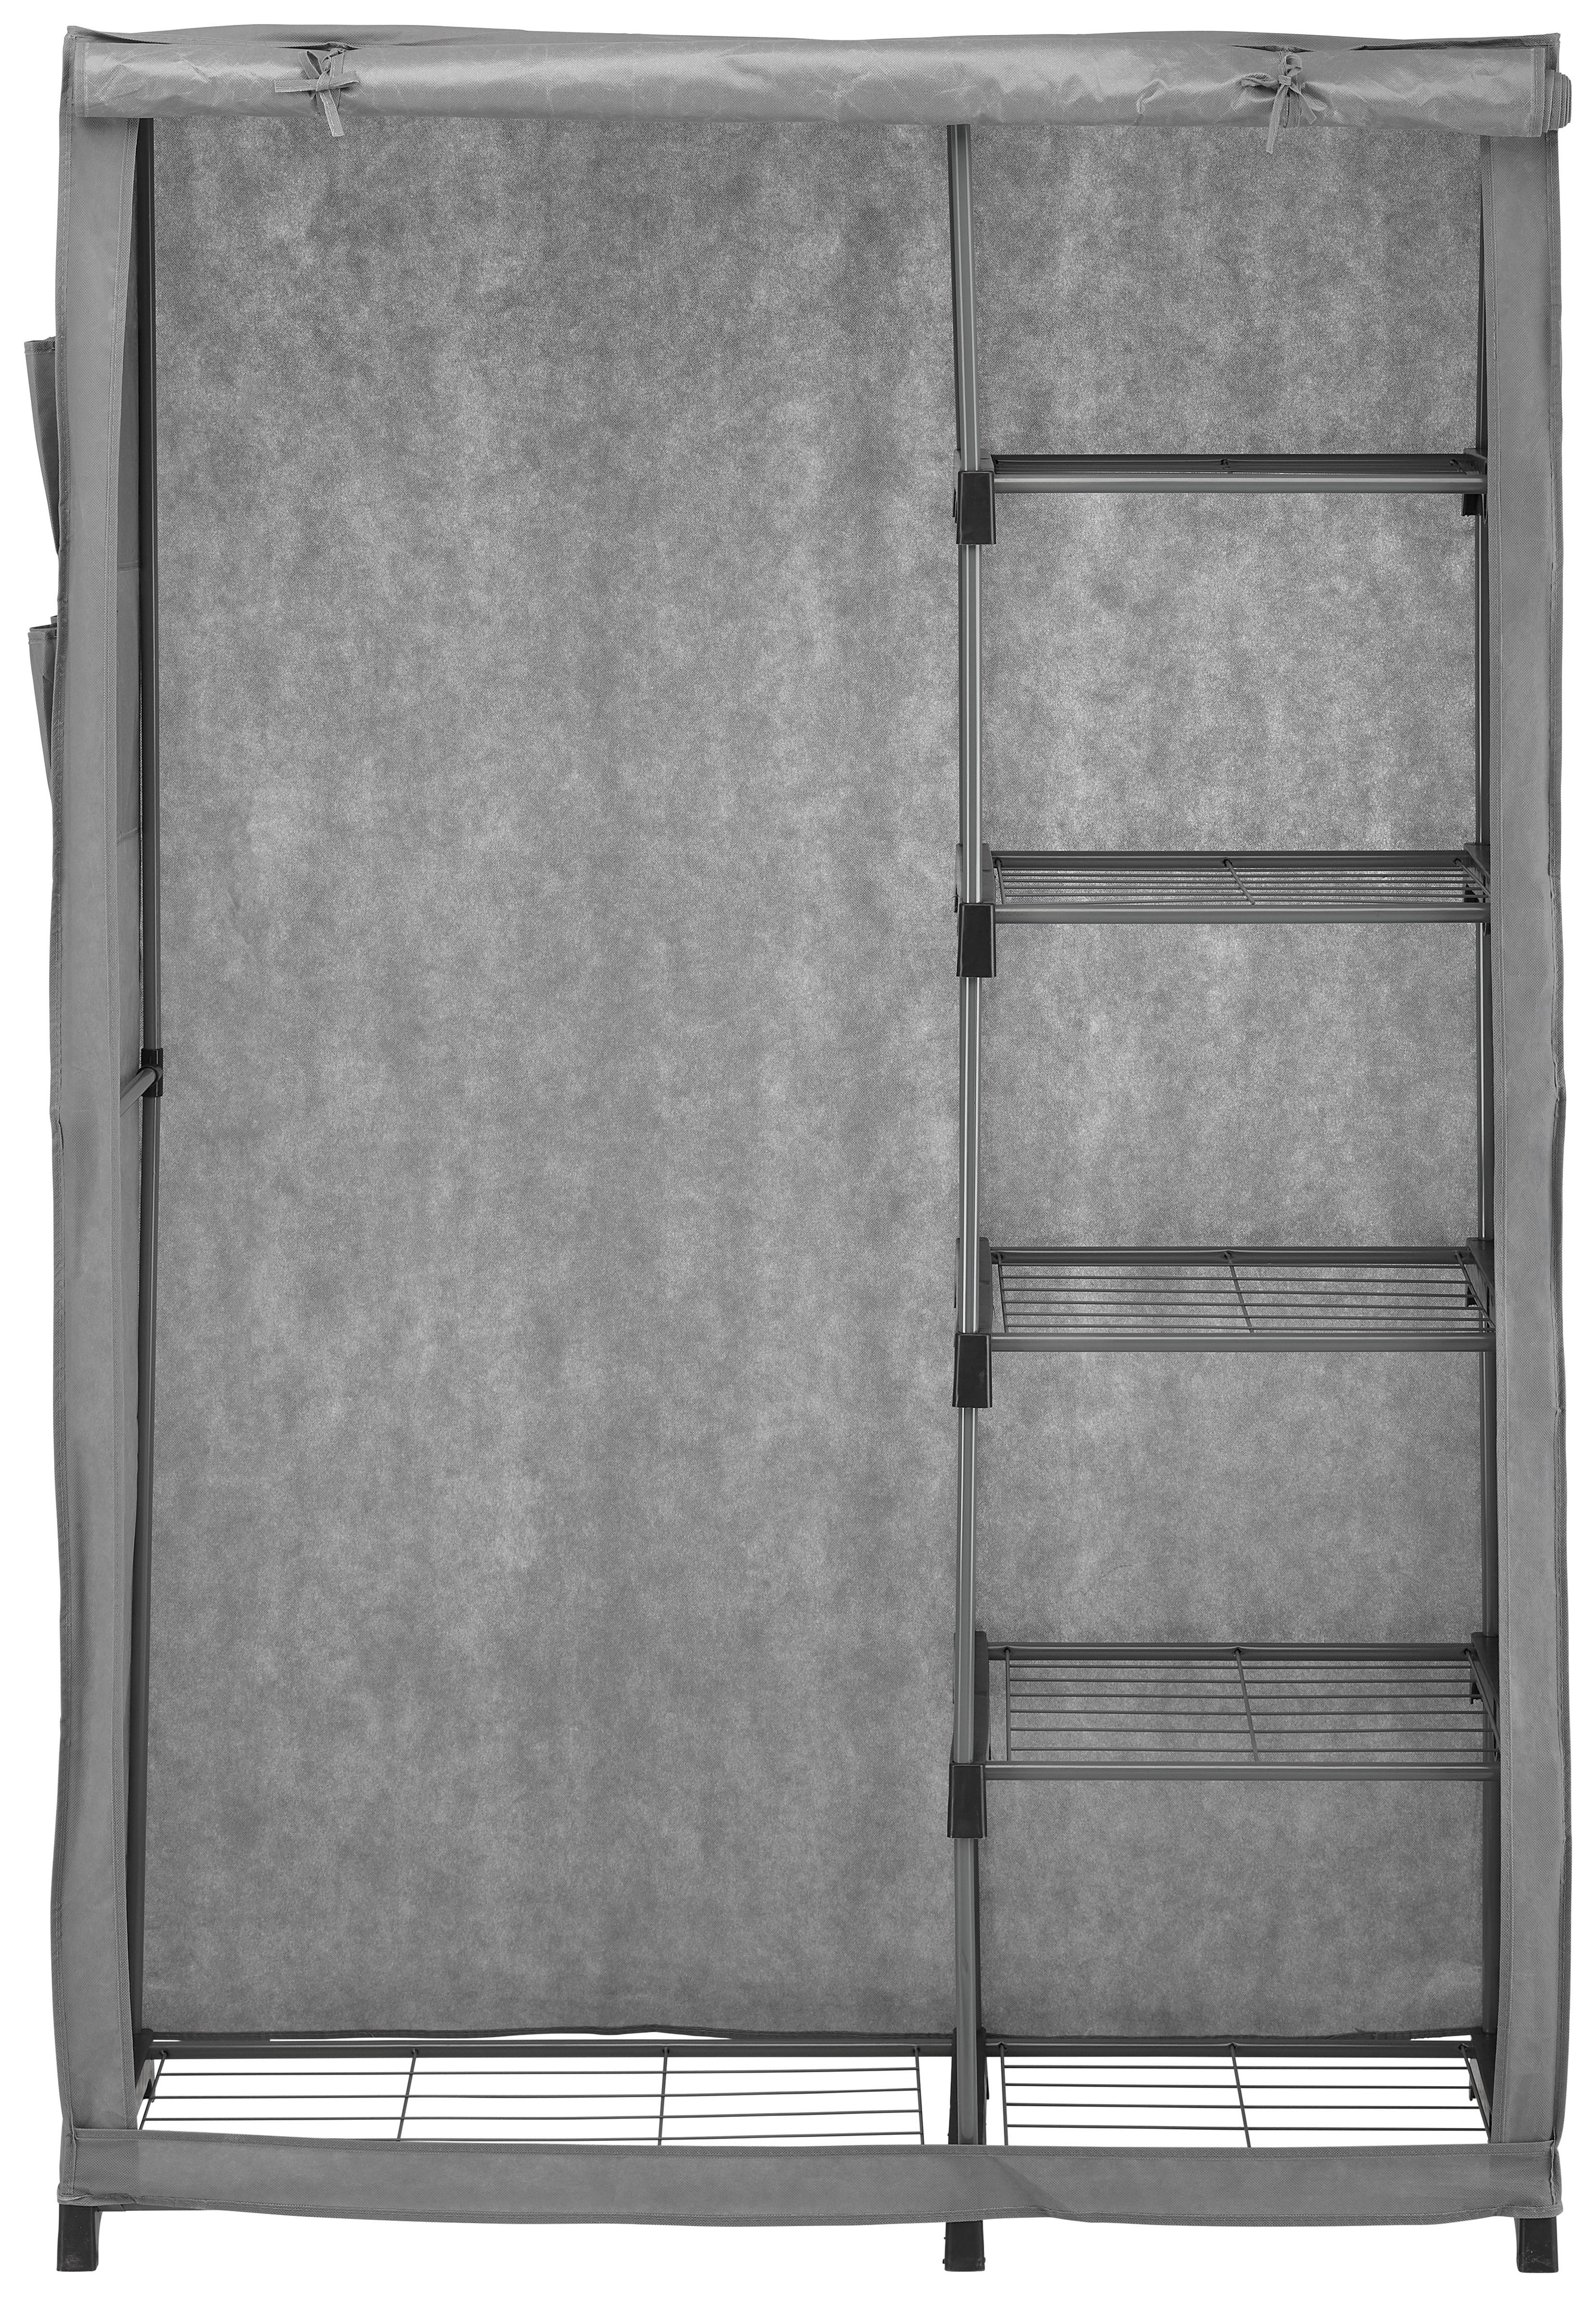 Látková Skříň Tanya - šedá, Konvenční, kov/textil (116/173/50cm) - Modern Living